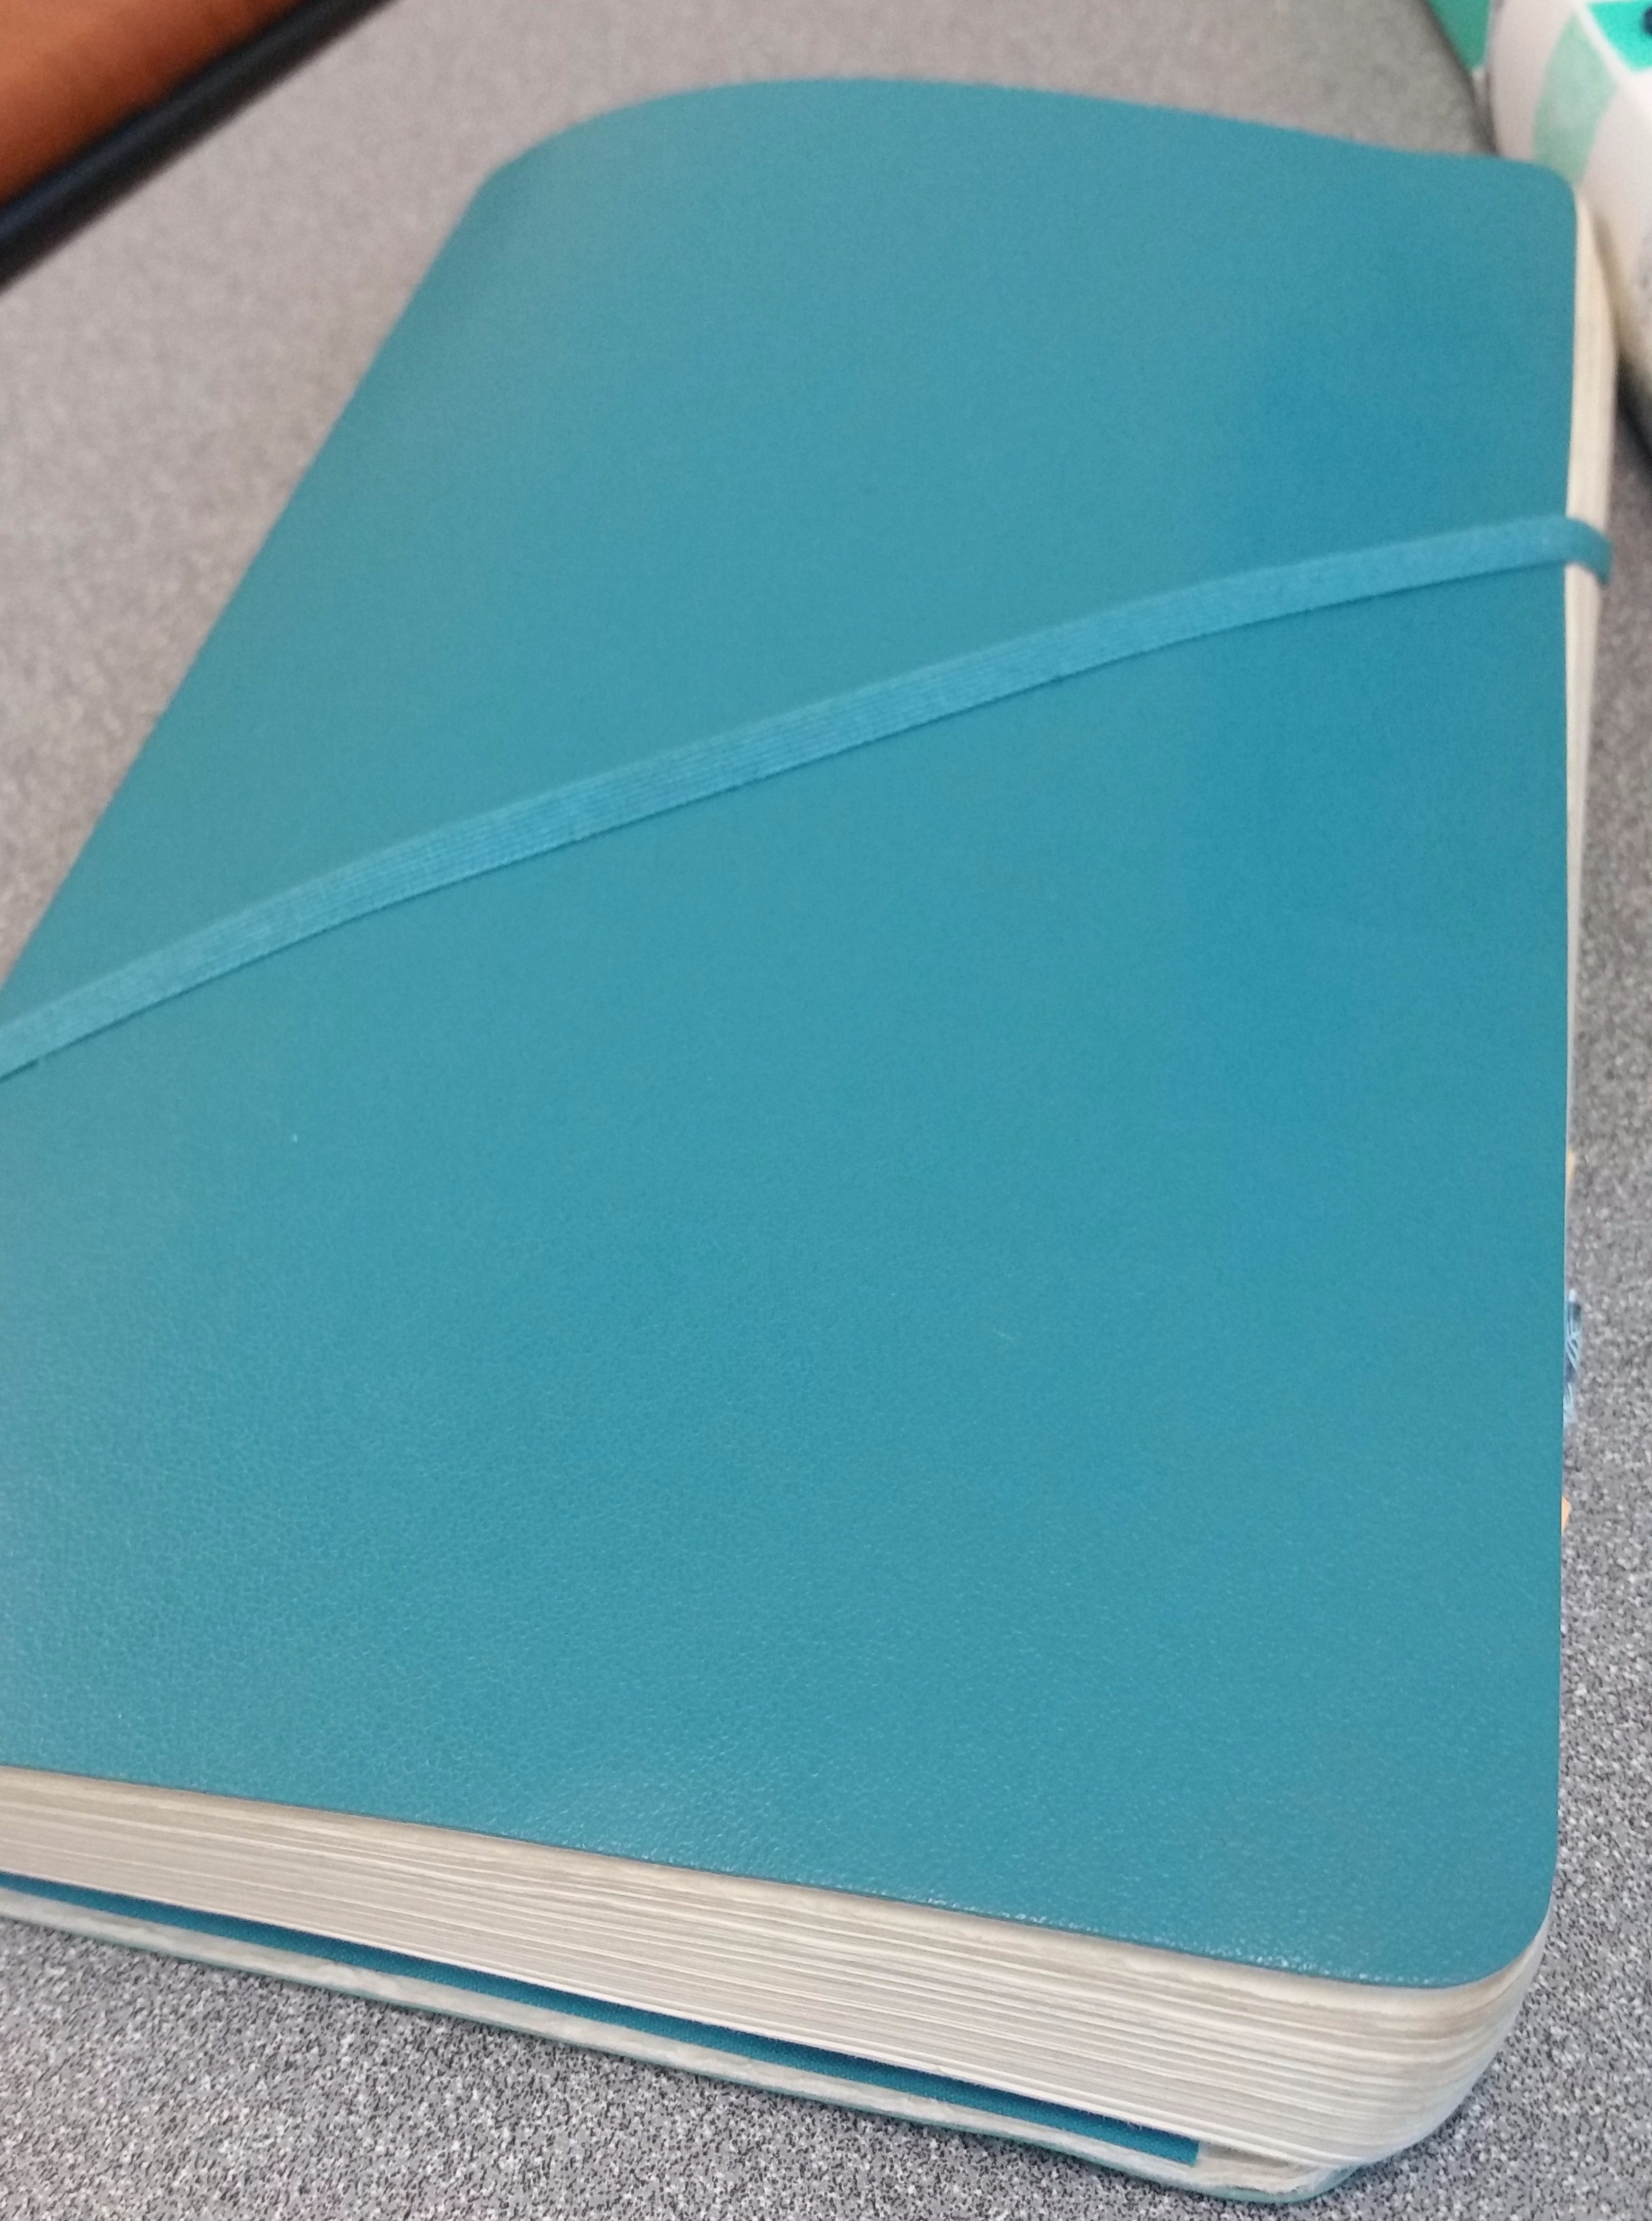 Moleskine Soft Dot Grid Notebook Review